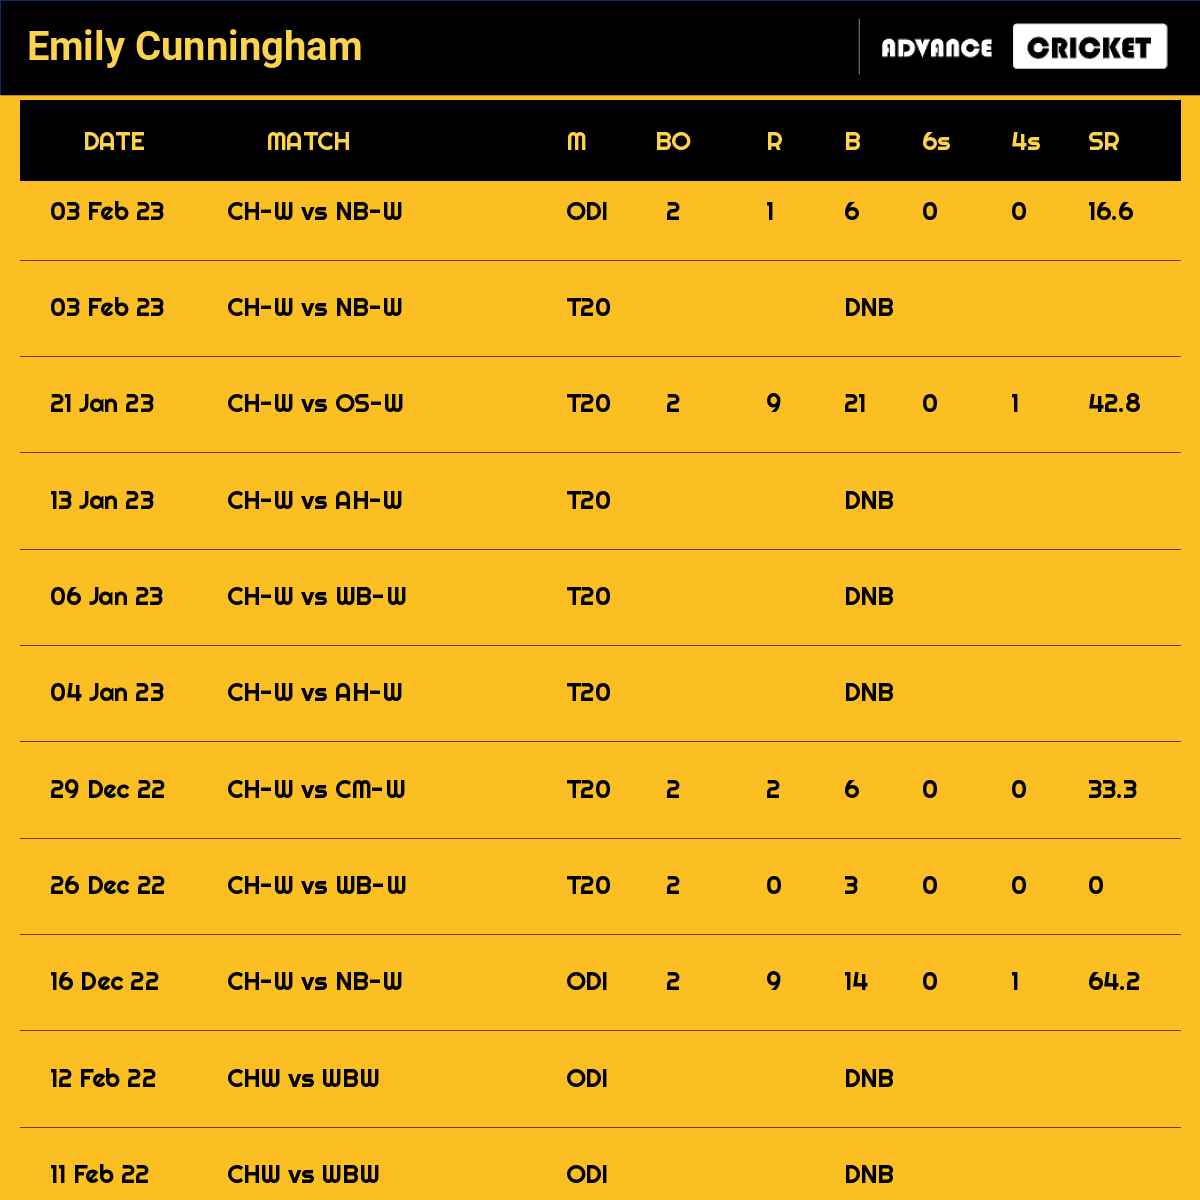 Emily Cunningham recent matches